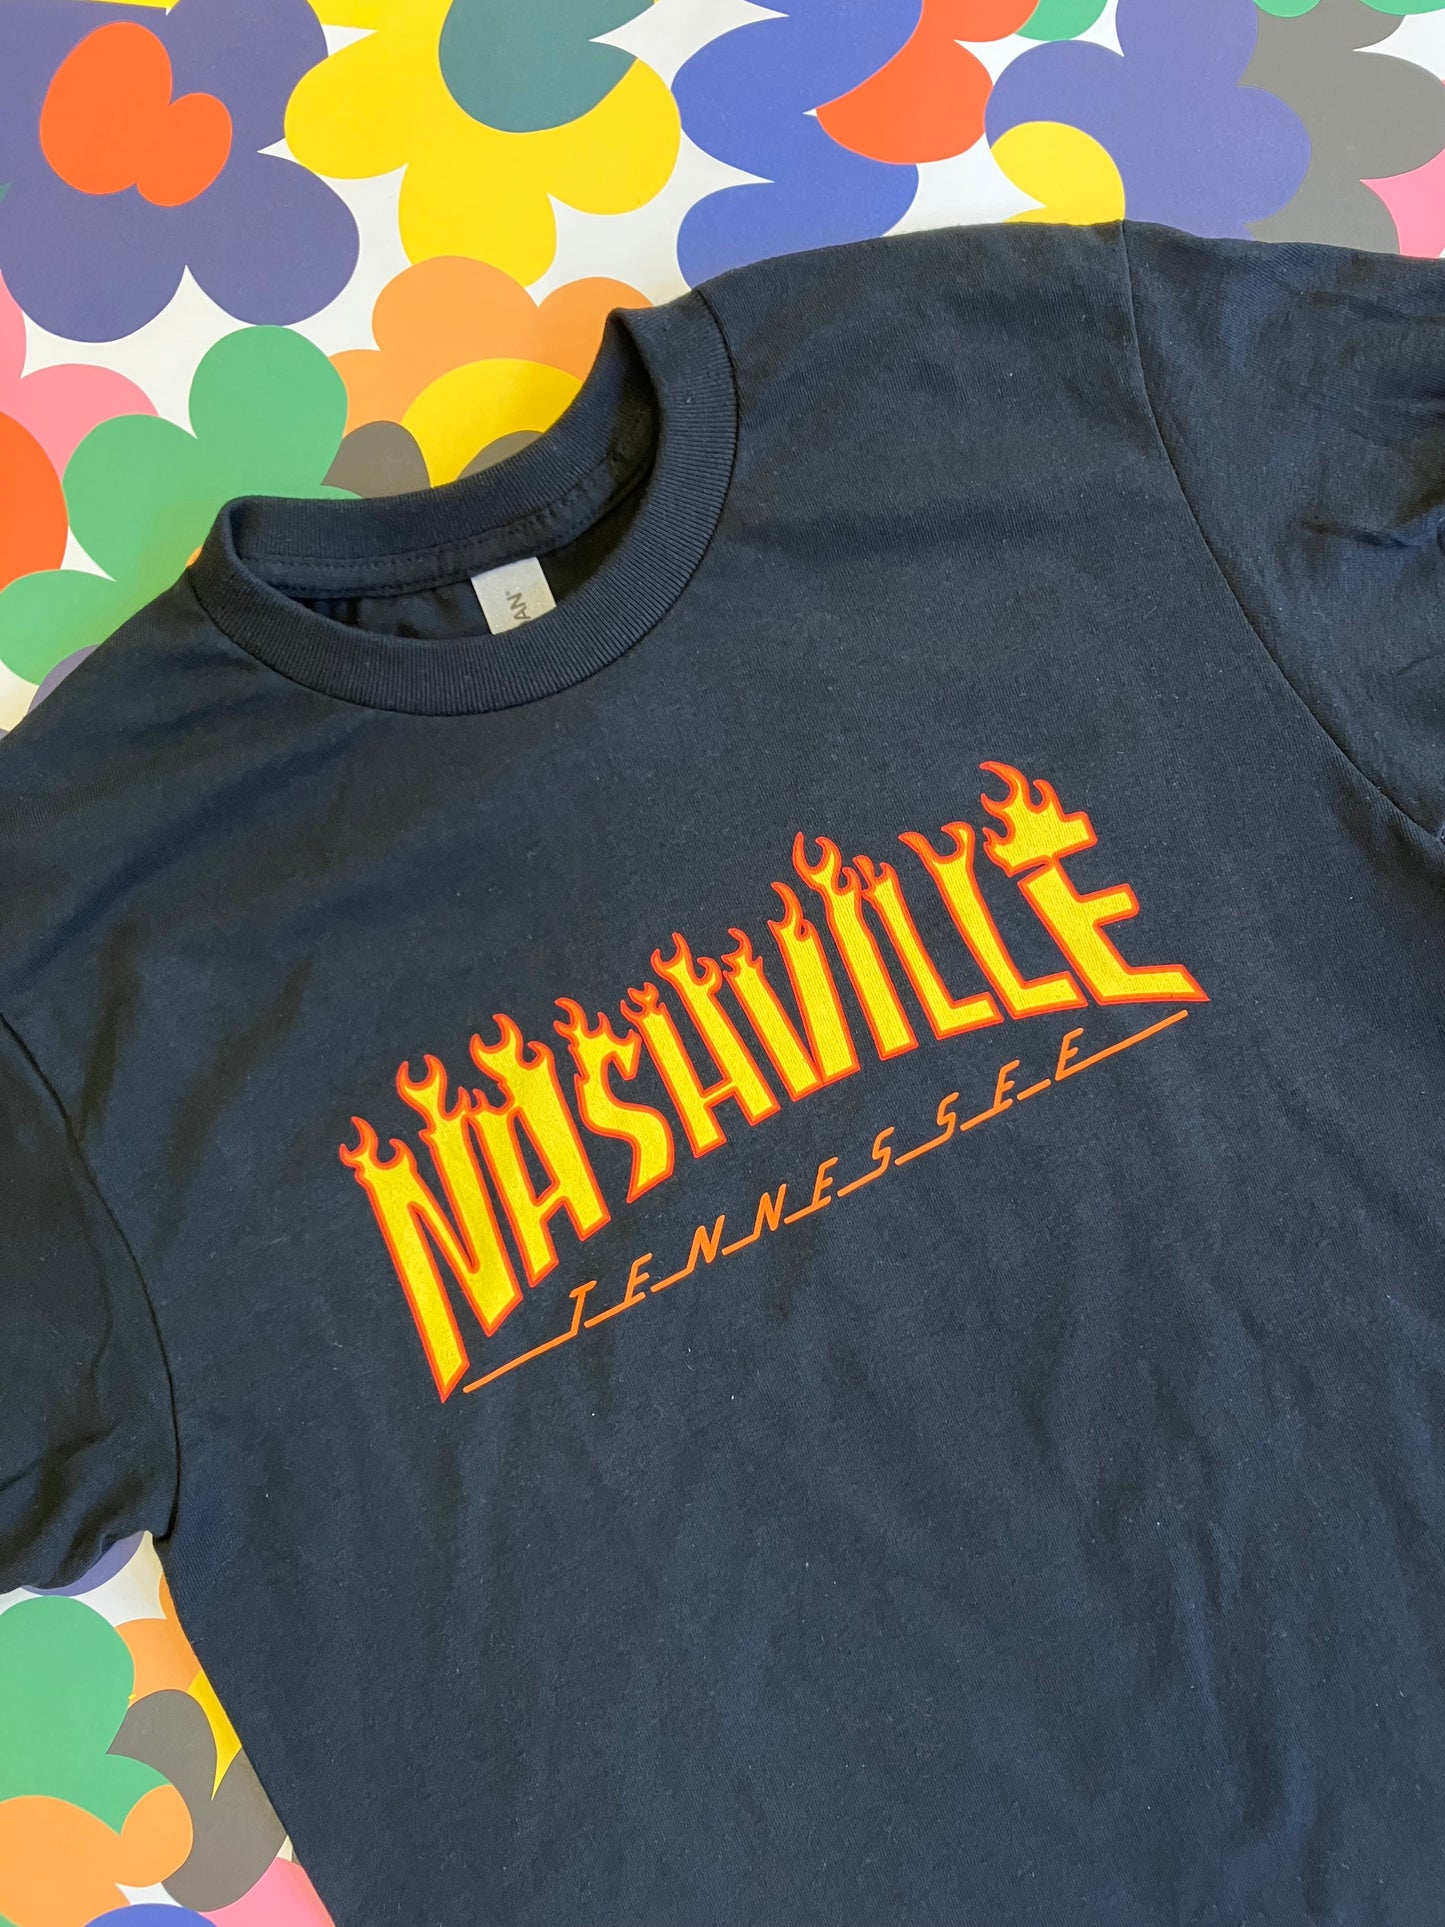 Nashville Thrasher Shirt